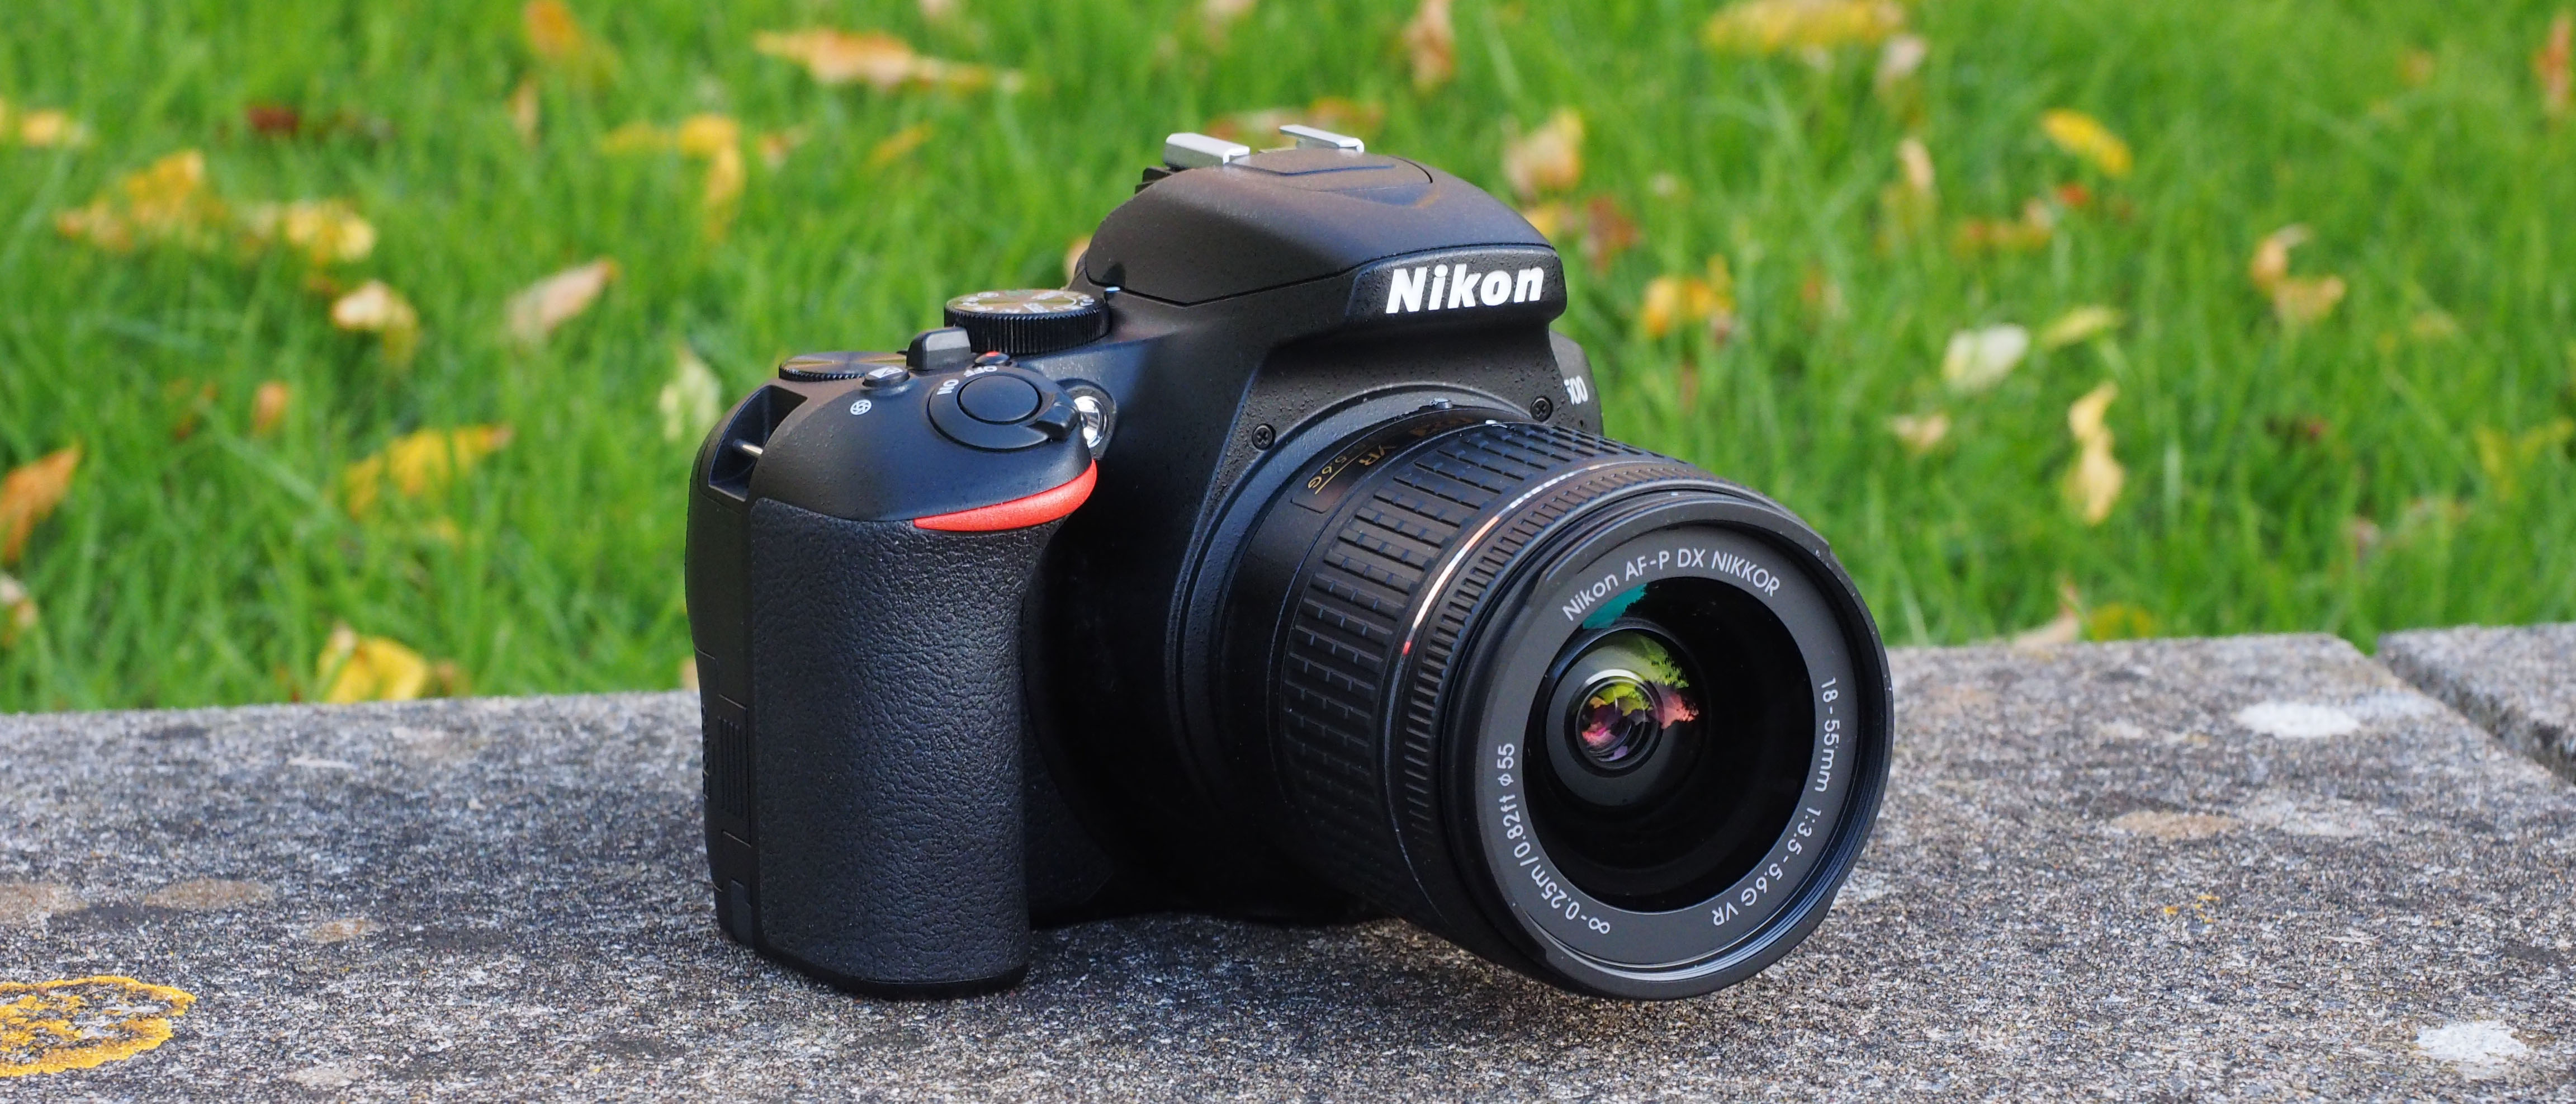 hunt Dormitory Squire Nikon D3500 review | Digital Camera World